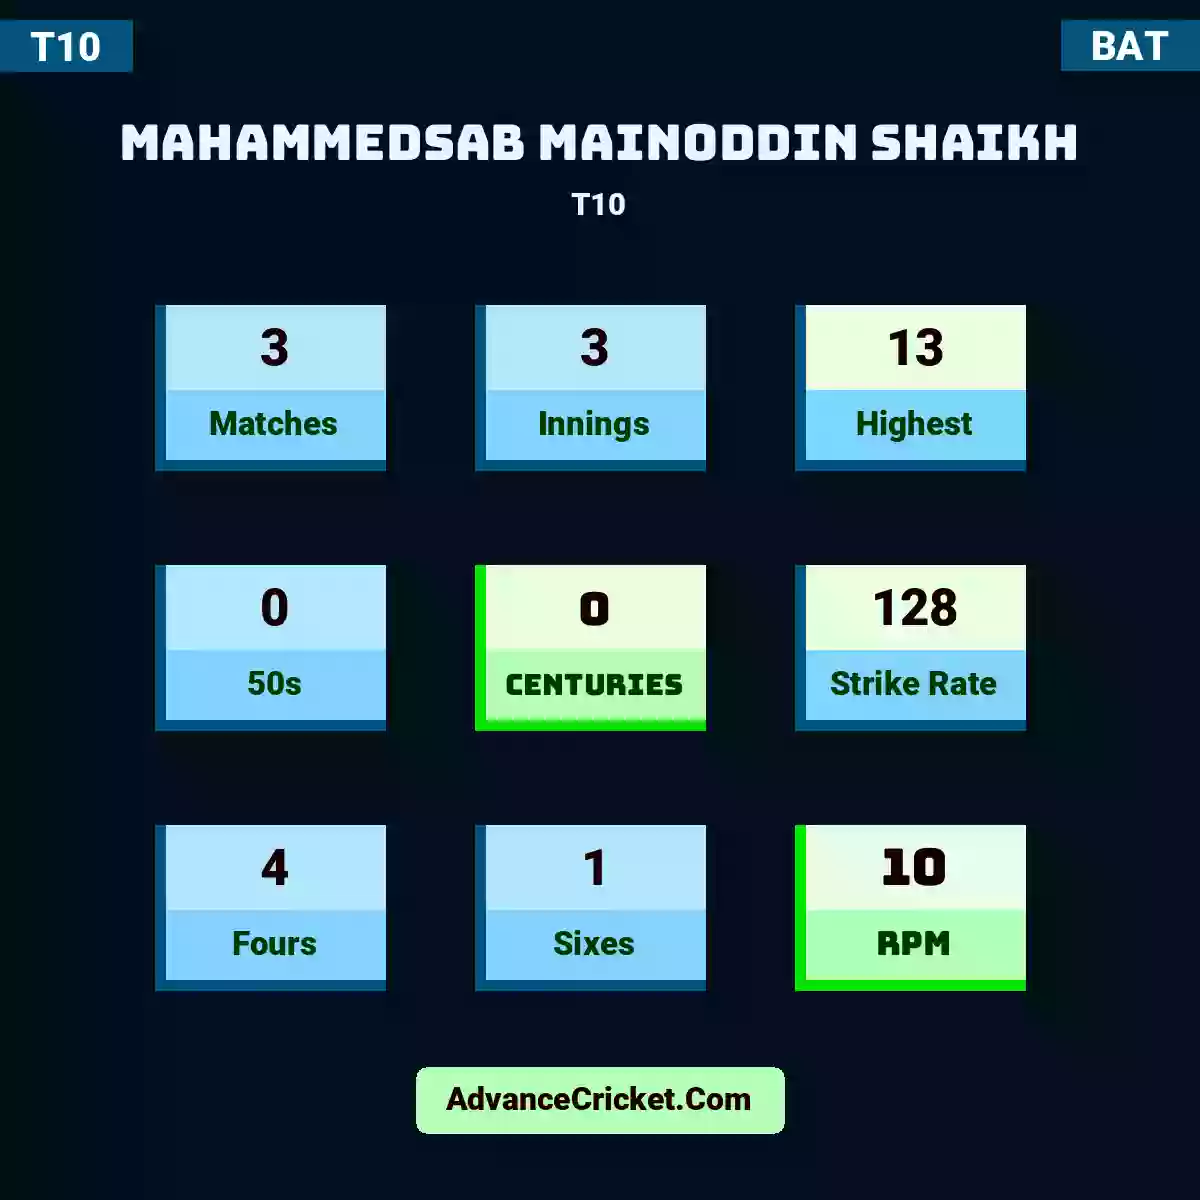 Mahammedsab Mainoddin Shaikh T10 , Mahammedsab Mainoddin Shaikh played 3 matches, scored 13 runs as highest, 0 half-centuries, and 0 centuries, with a strike rate of 128. M.Shaikh hit 4 fours and 1 sixes, with an RPM of 10.